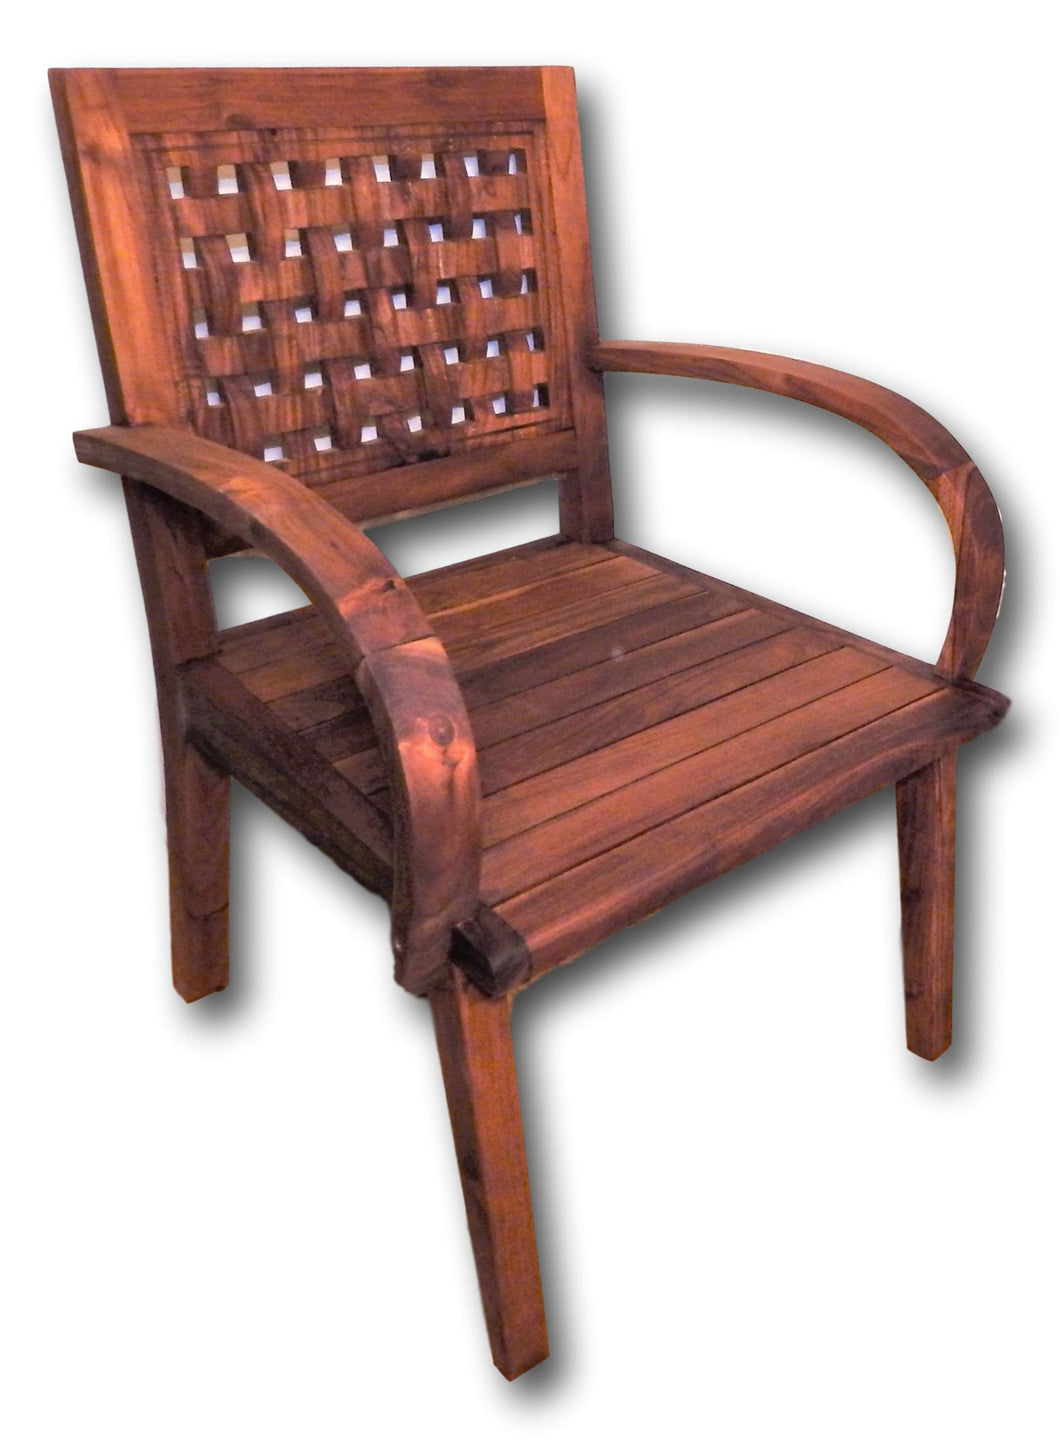 Dining kitchen patio chair designer furniture from Teak wood